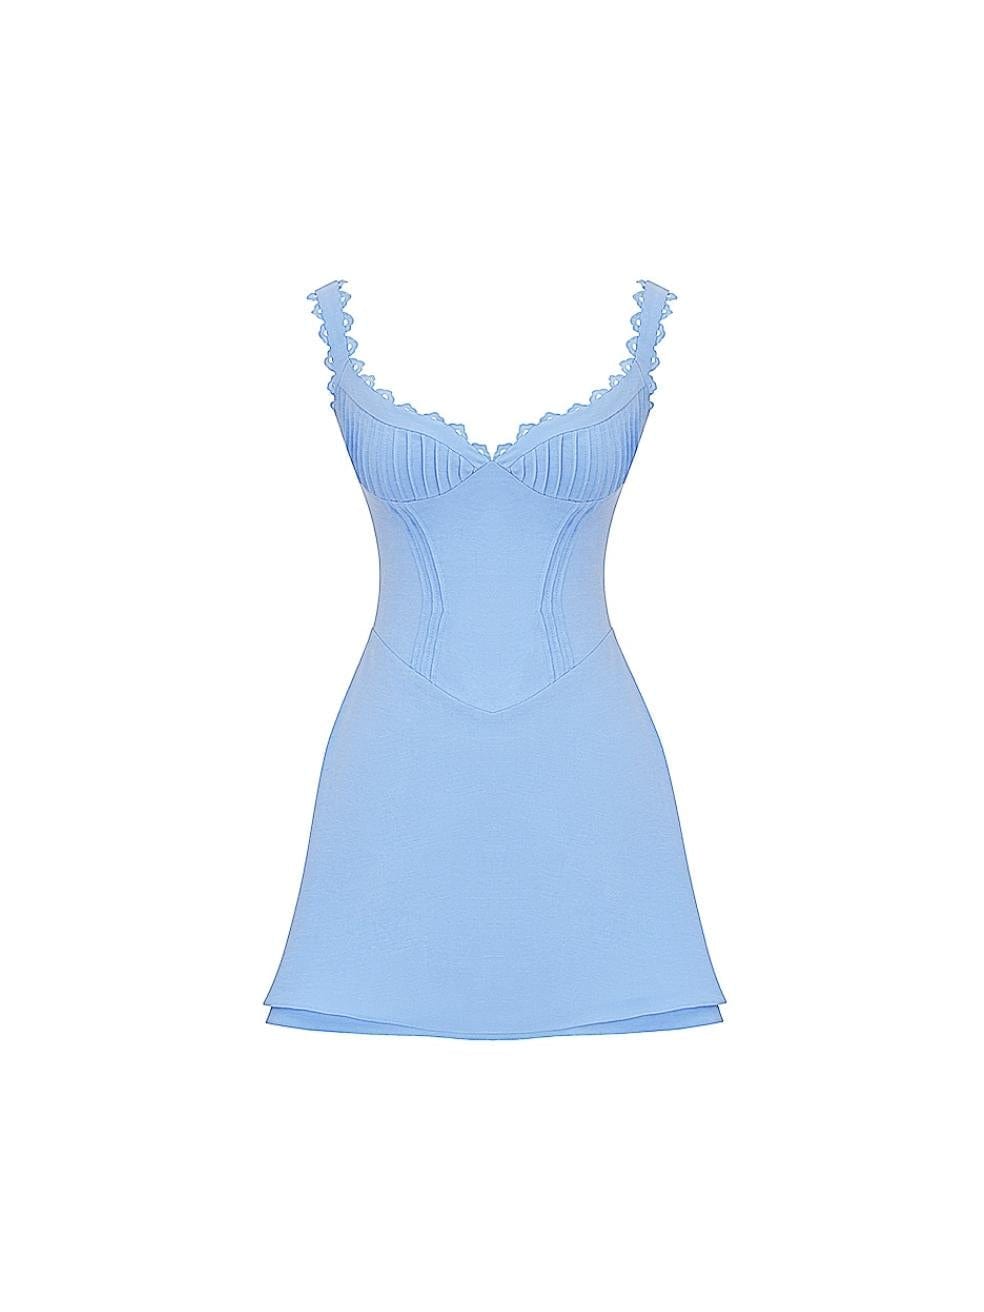 Tillly Blue Pin Tuck Mini Dress